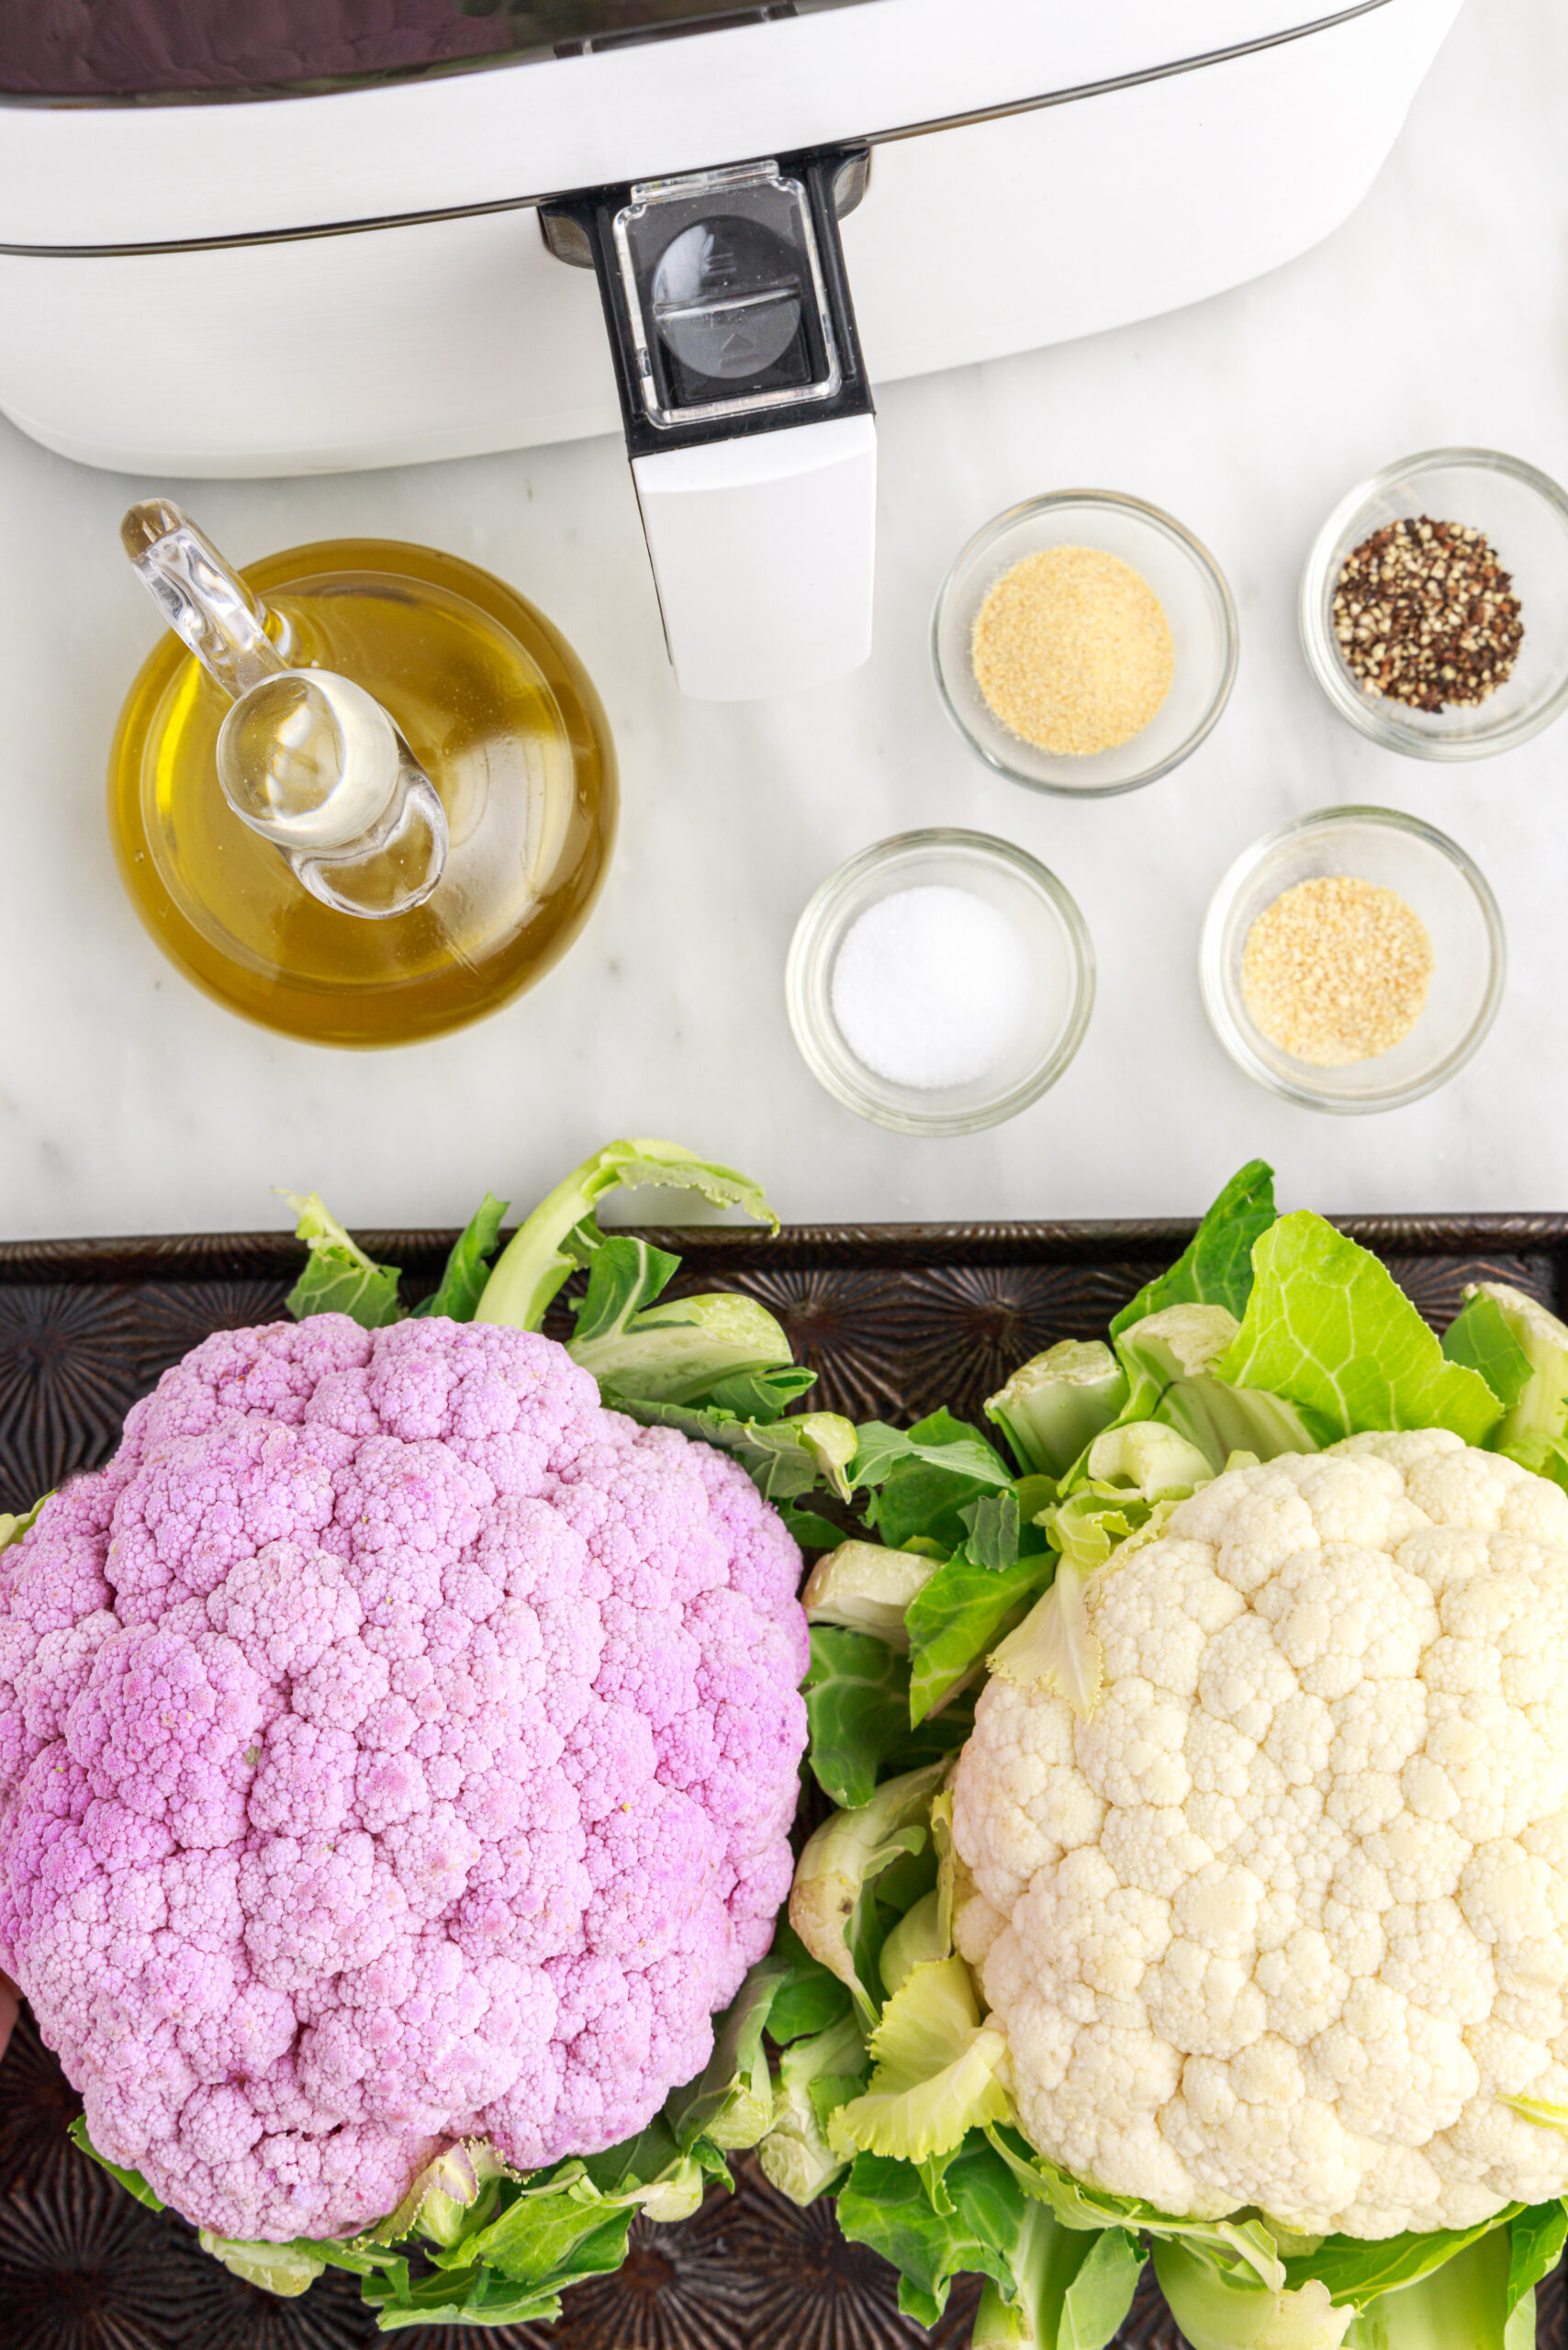 A head of purple cauliflower, a head of white cauliflower, and bowls of garlic powder, onion powder, salt, pepper, and a jar of olive oil